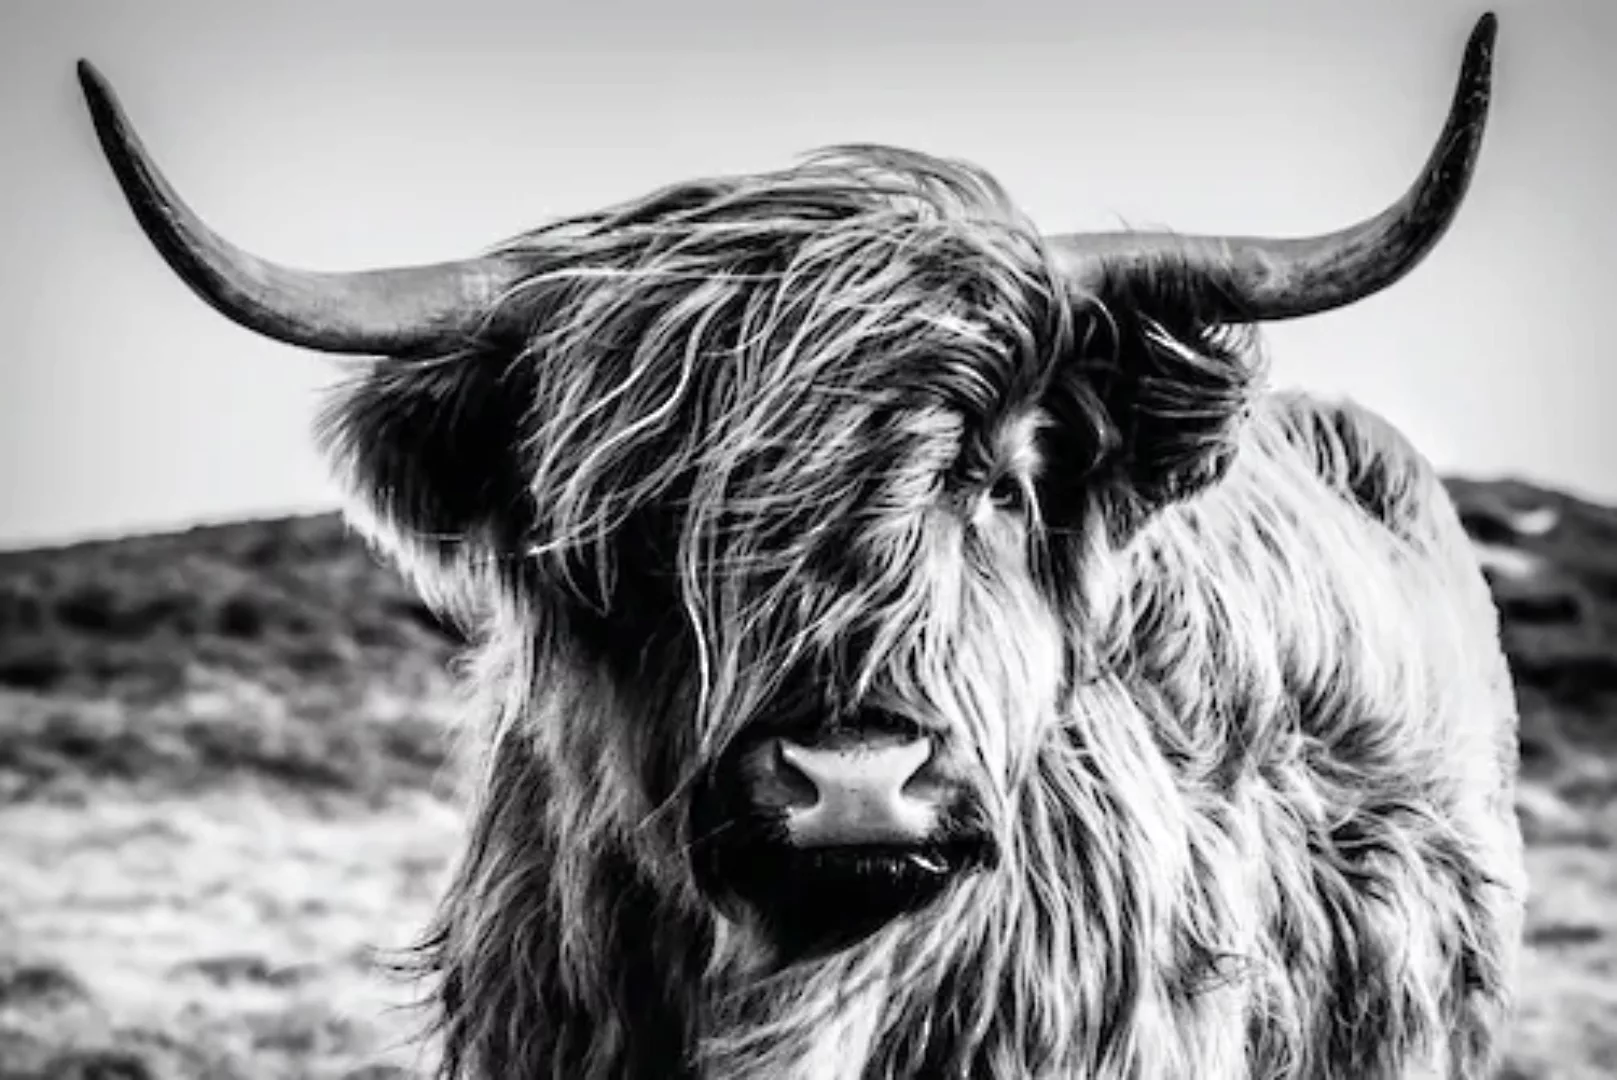 Bönninghoff Keilrahmenbild Büffel B/L: ca. 60x90 cm günstig online kaufen